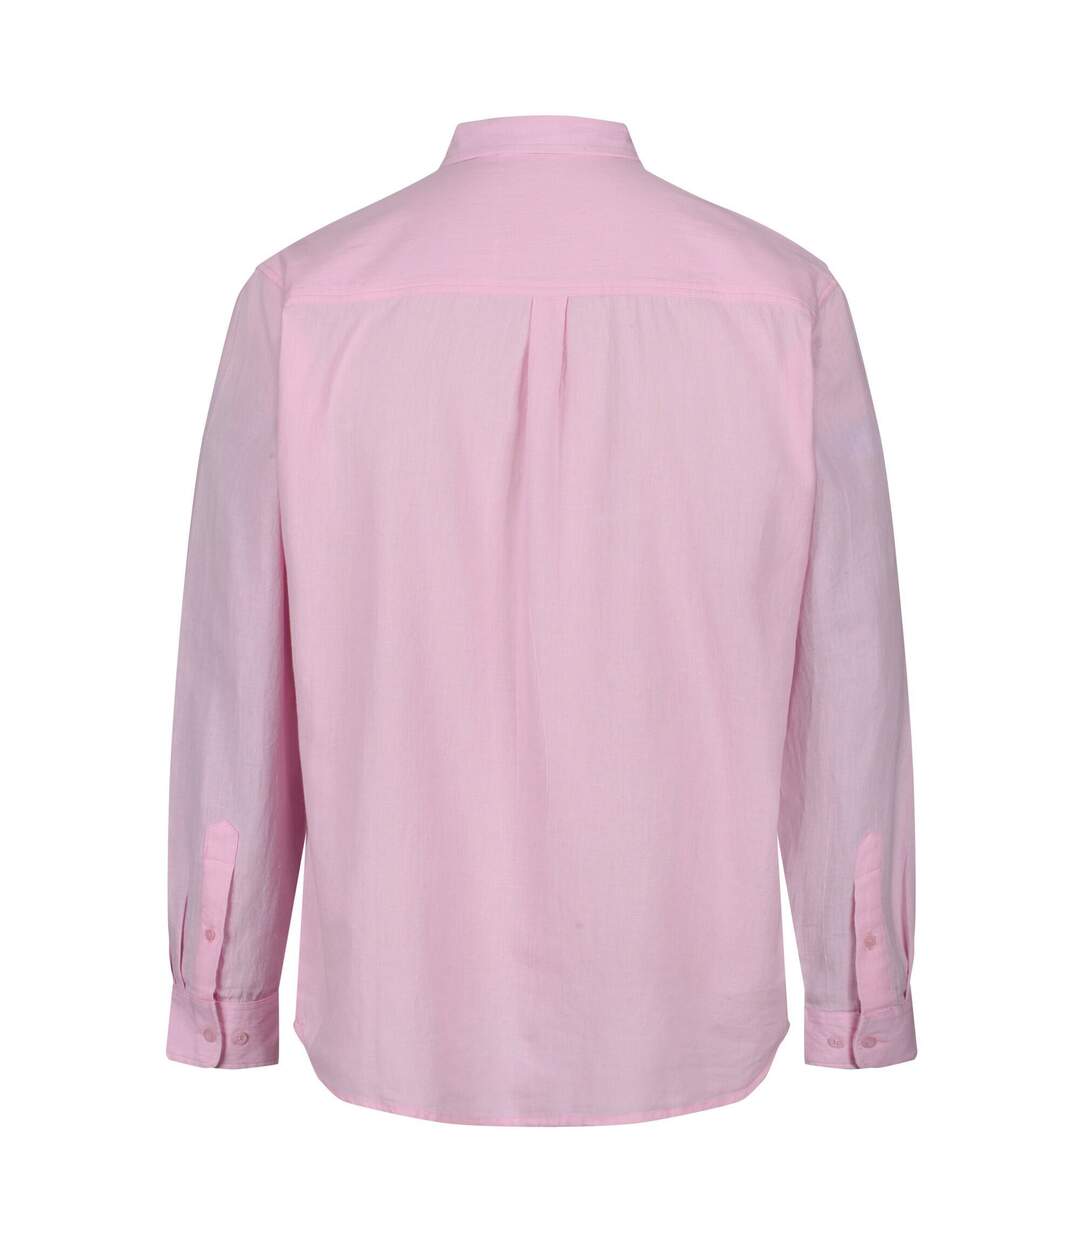 Regatta Mens Bard Coolweave Long-Sleeved Shirt (Pink)